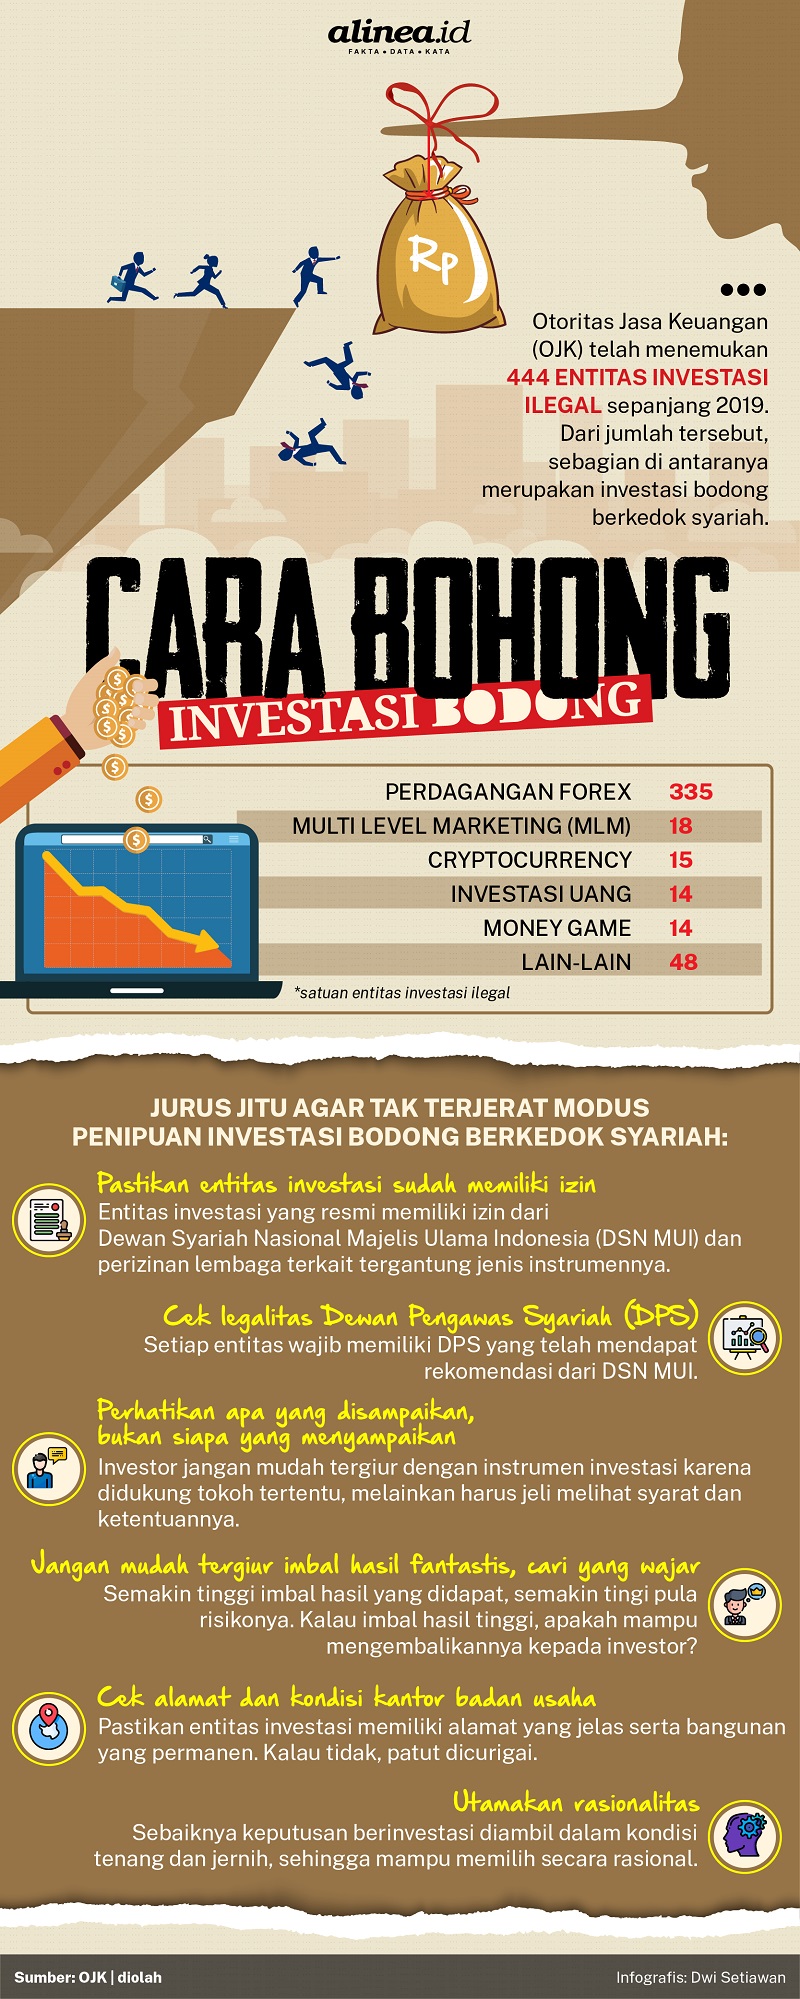 Infografik cara bohong investasi bodong. Alinea.id/Dwi Setiawan